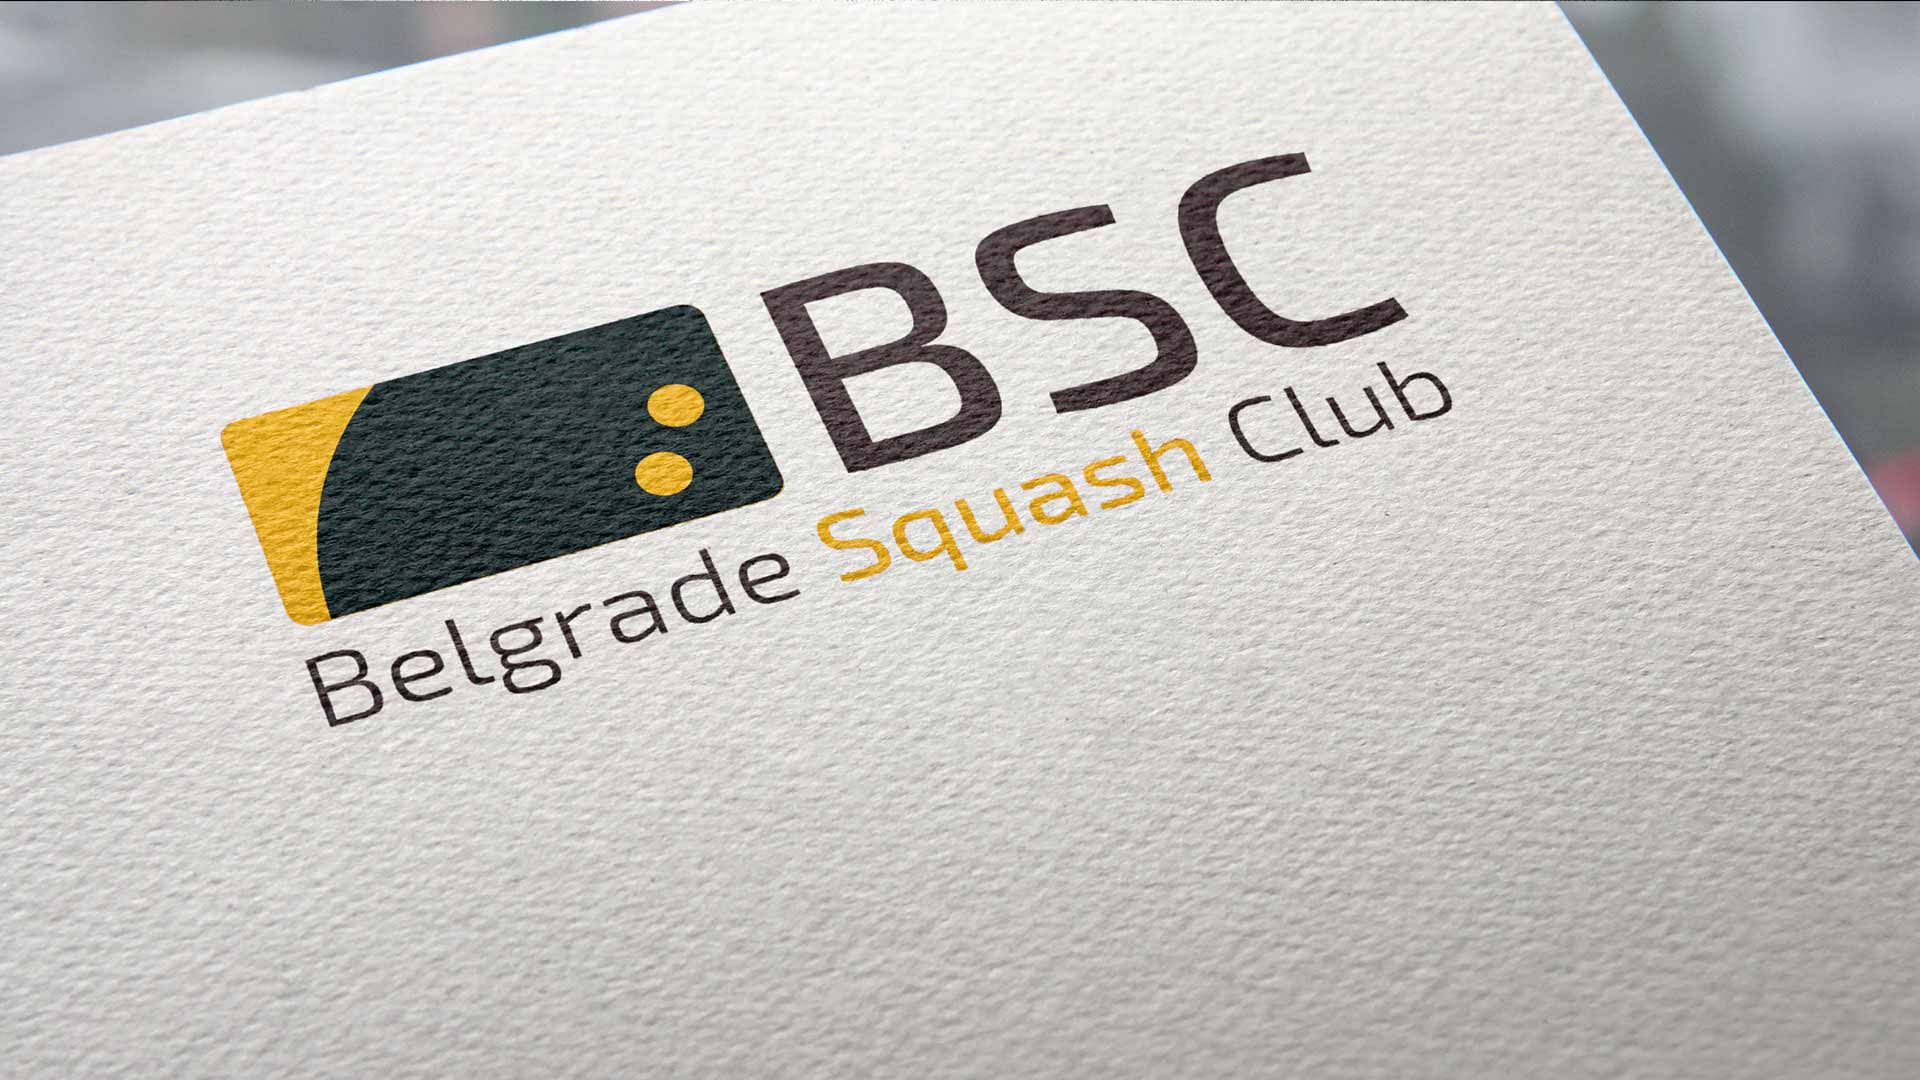 Belgrade Squash Club